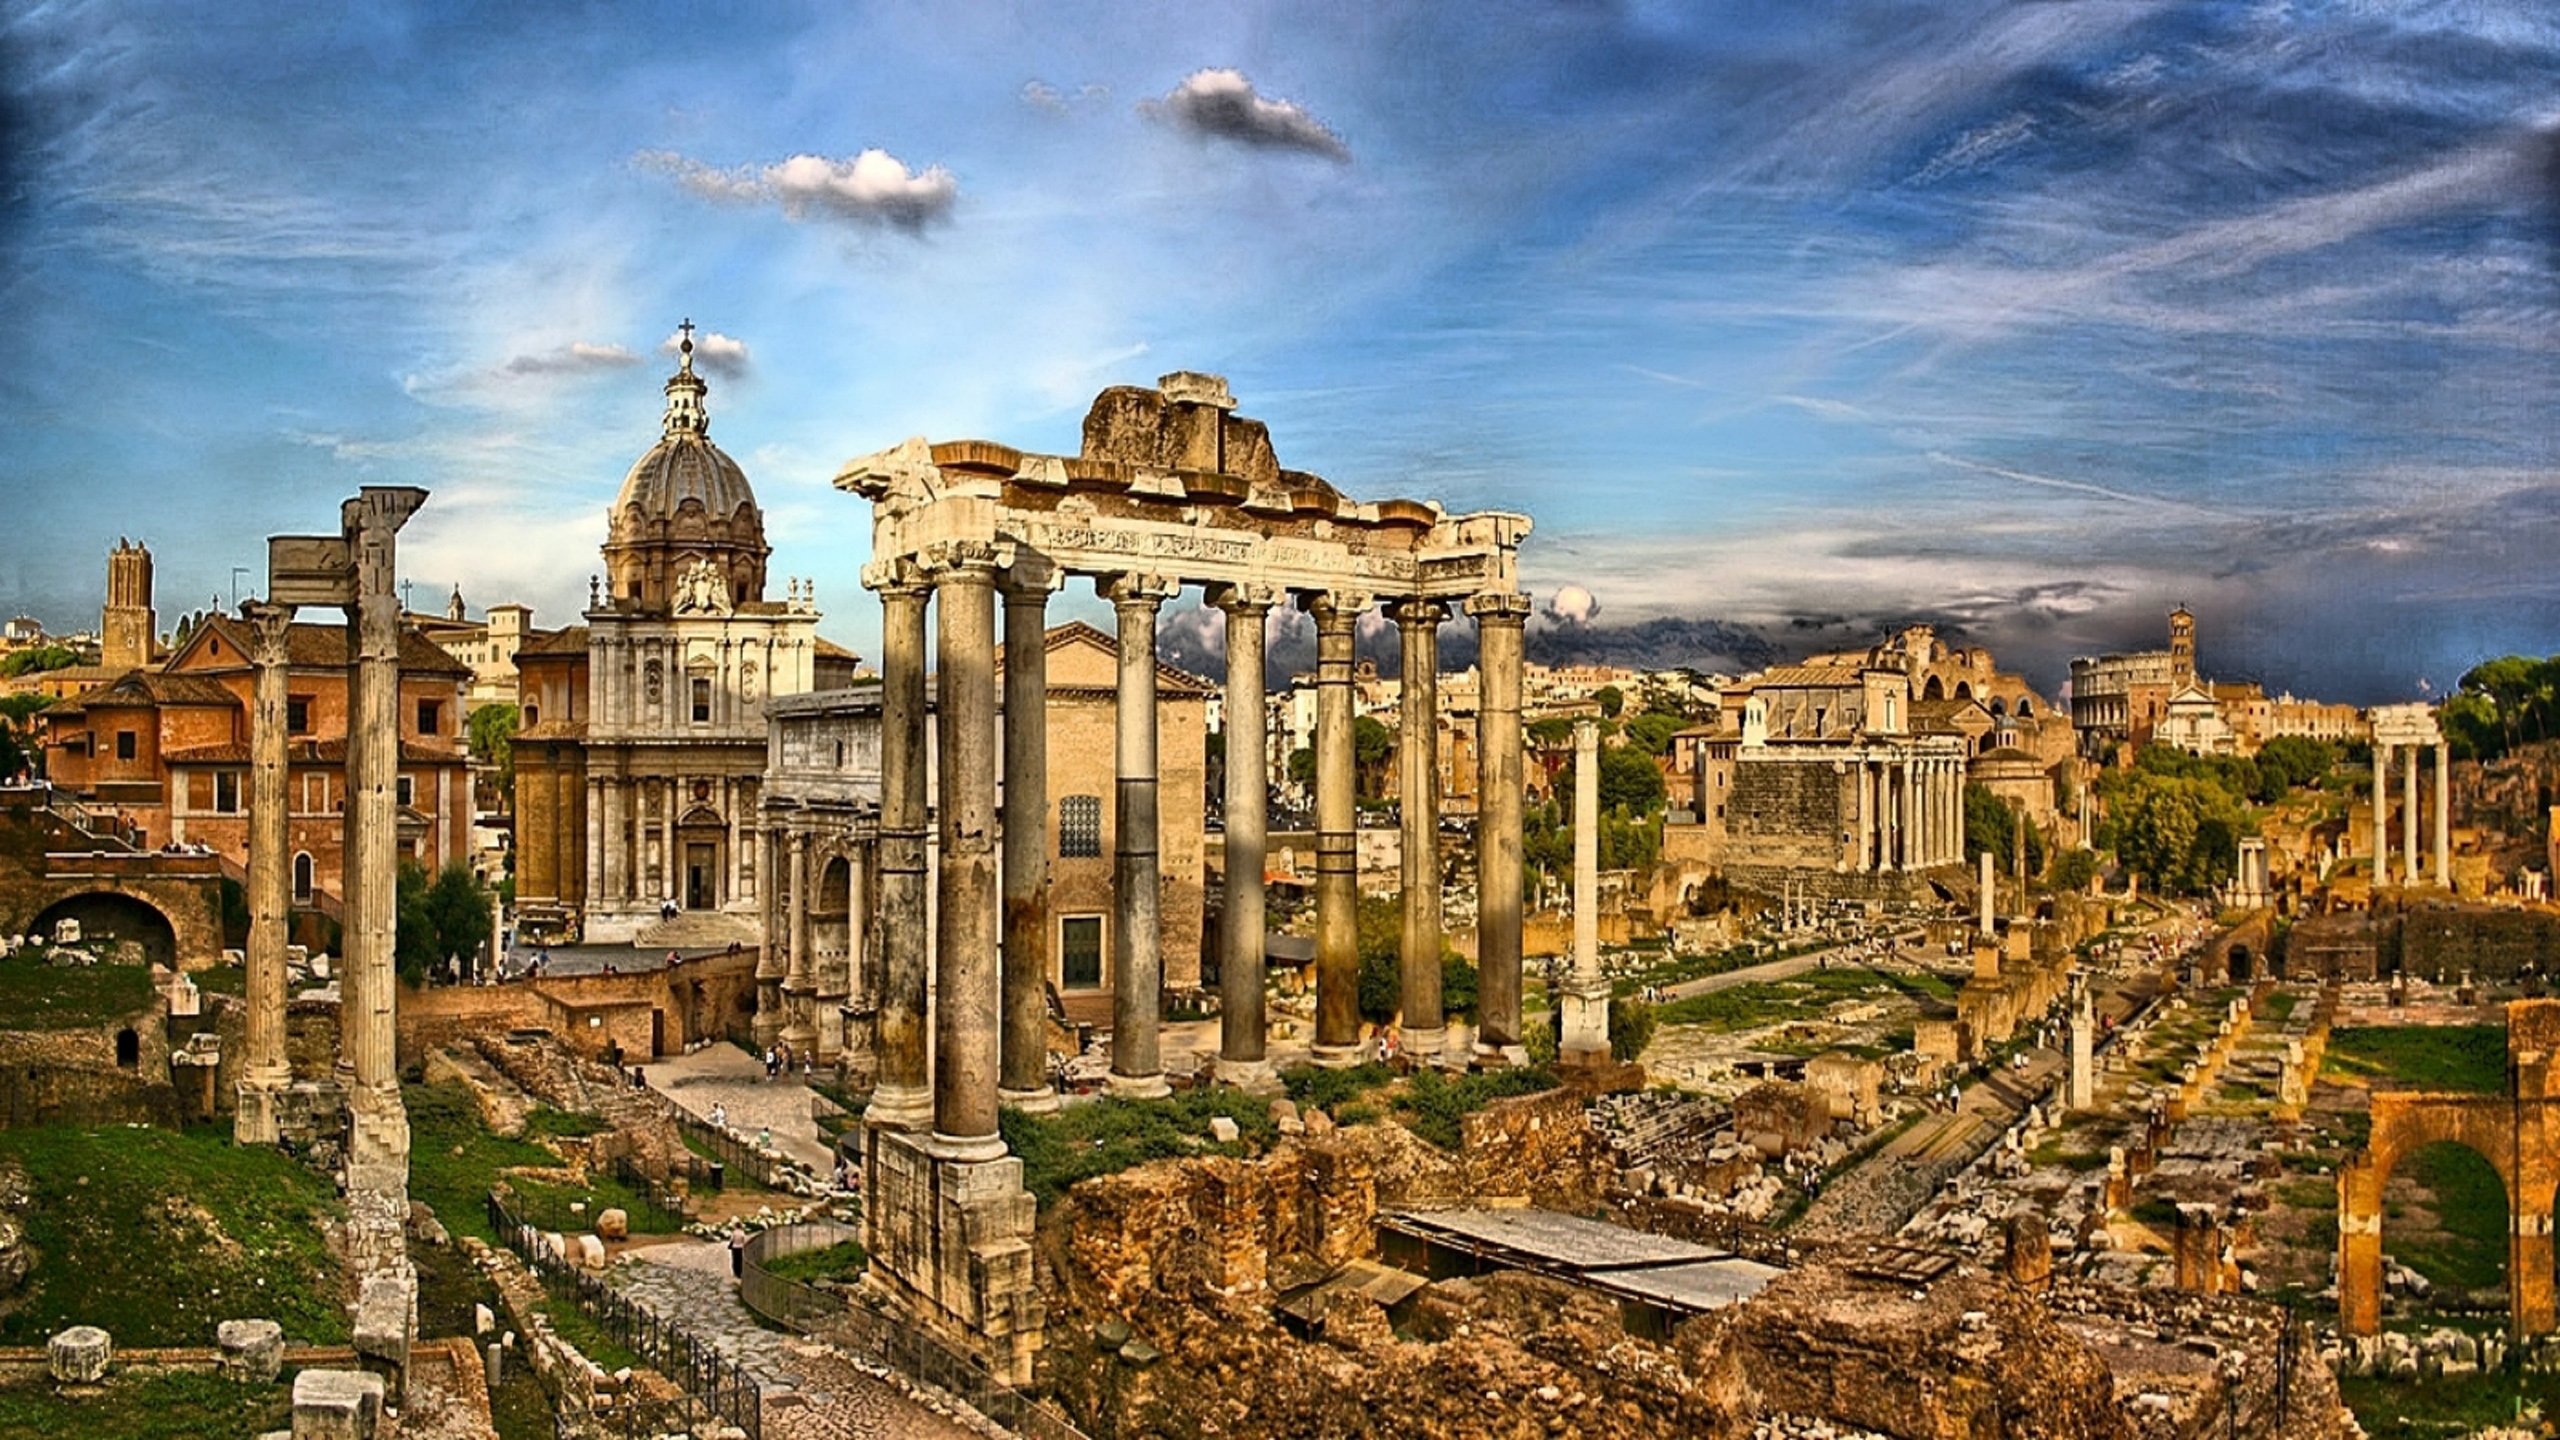 Forum Romanum Italy Architecture Rome Ruins HD Wallpaper 1755890, Wallpaper13.com